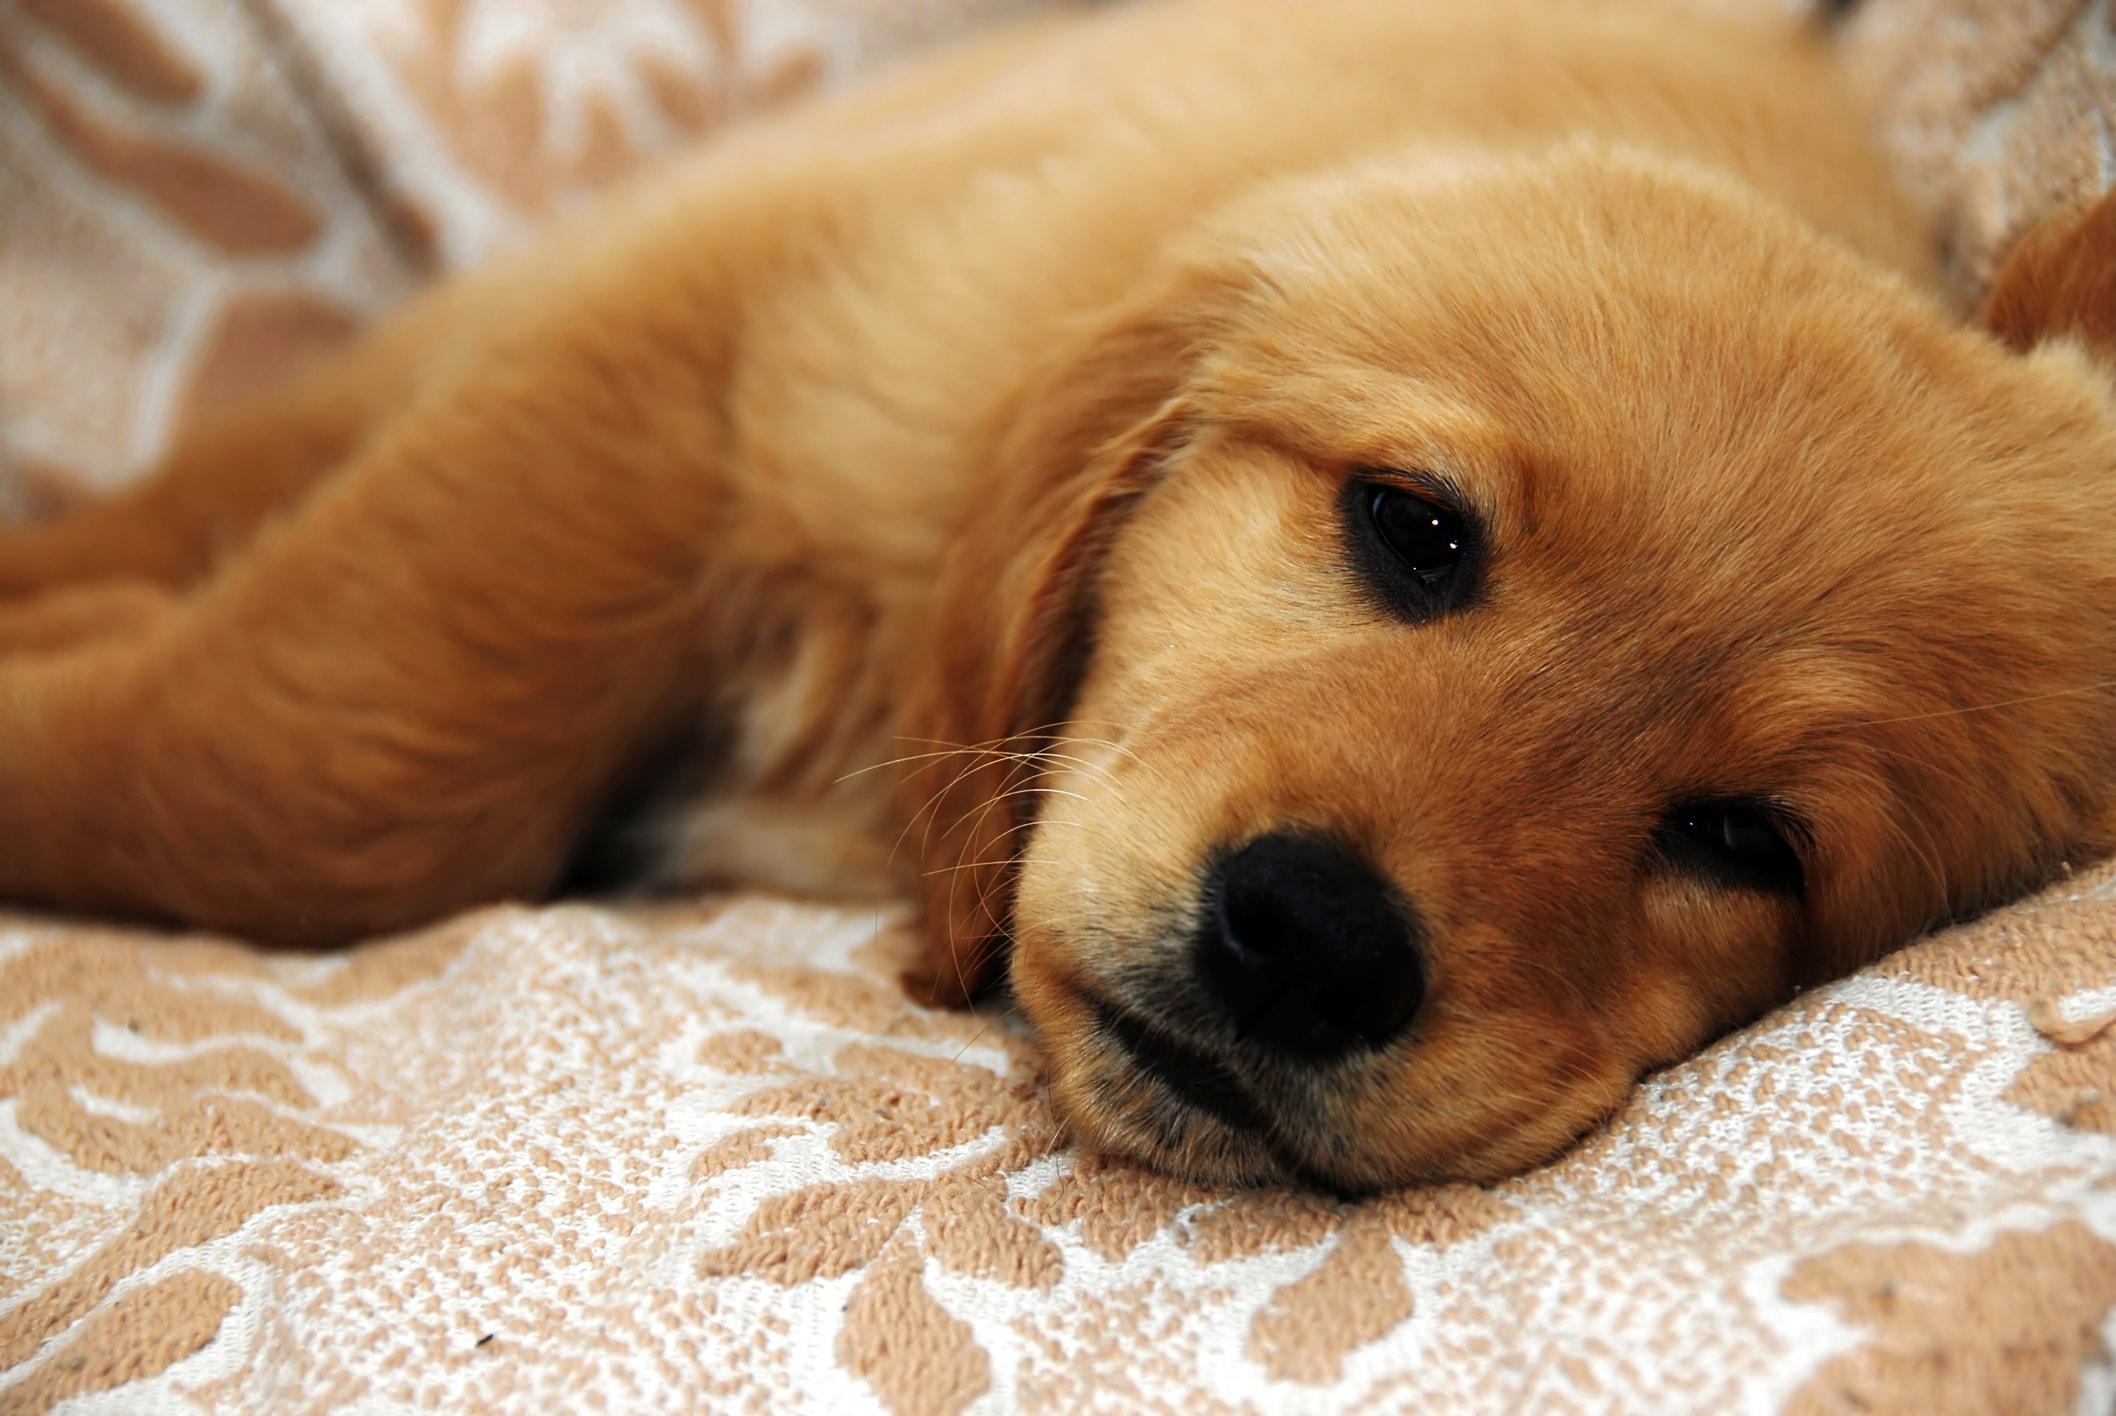 Golden retriever puppy sick with diarrhea